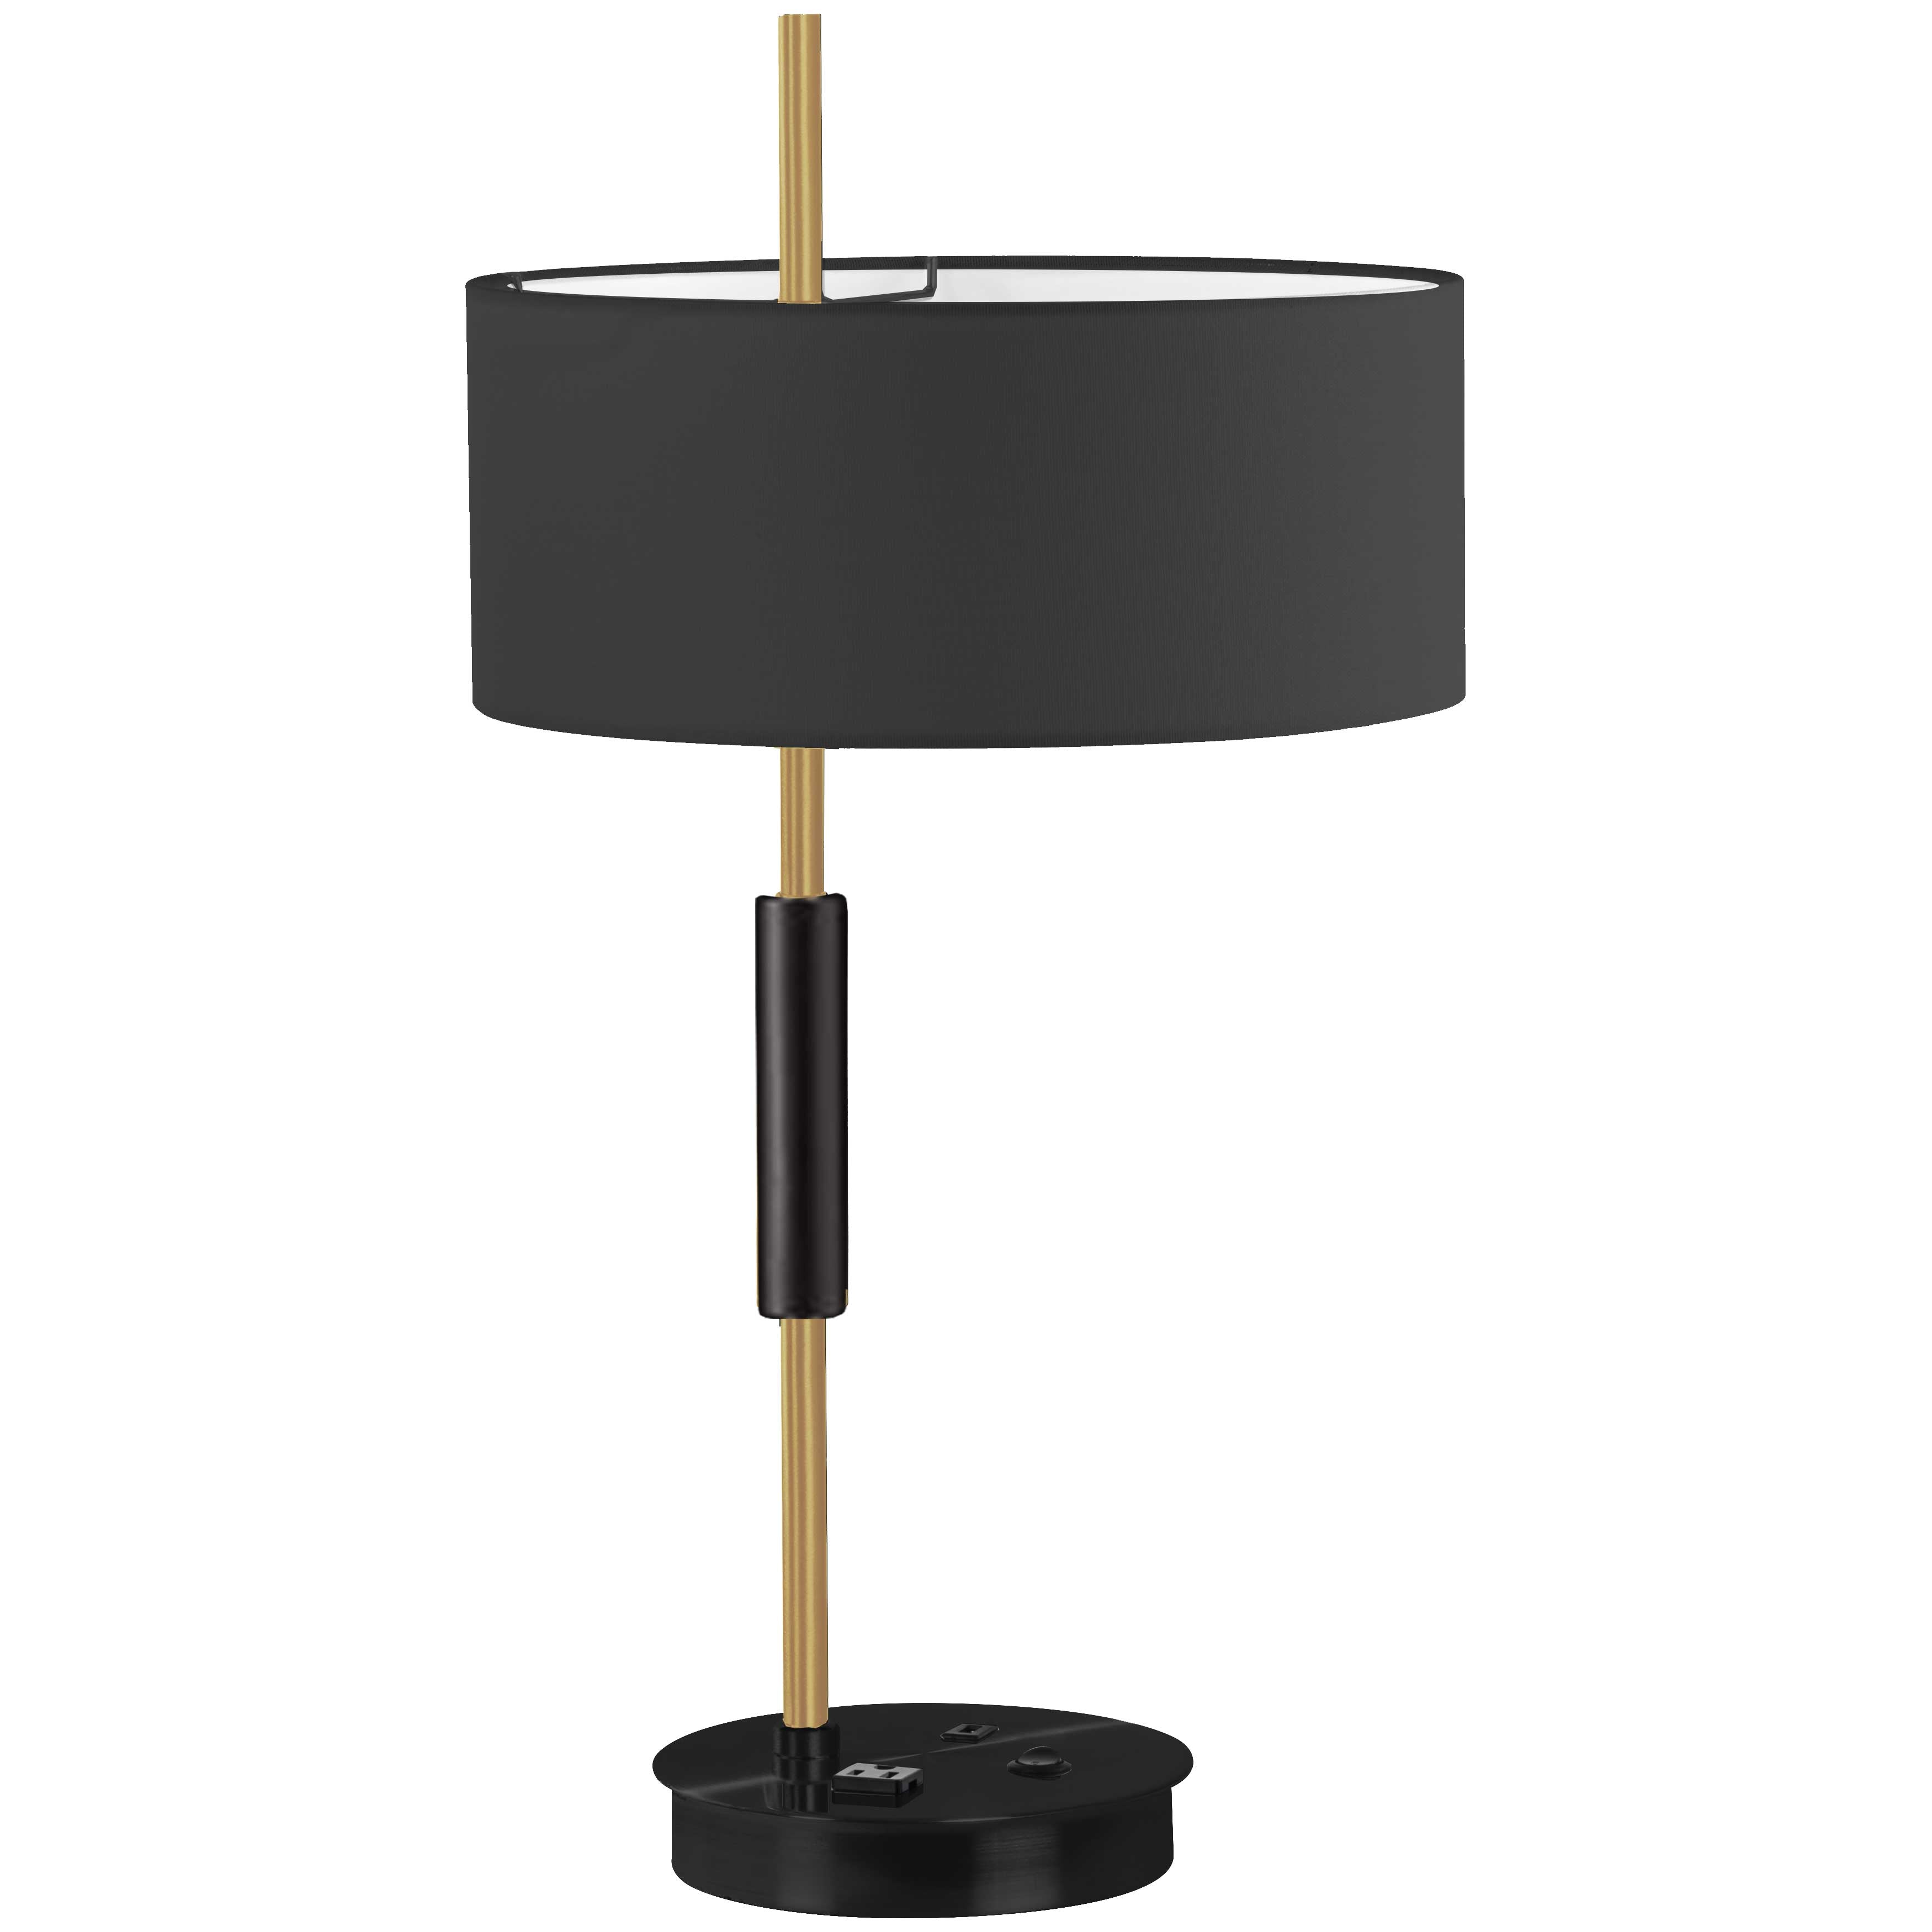 FITZGERALD Table lamp Black, Gold - FTG-261T-MB-AGB-BK | DAINOLITE